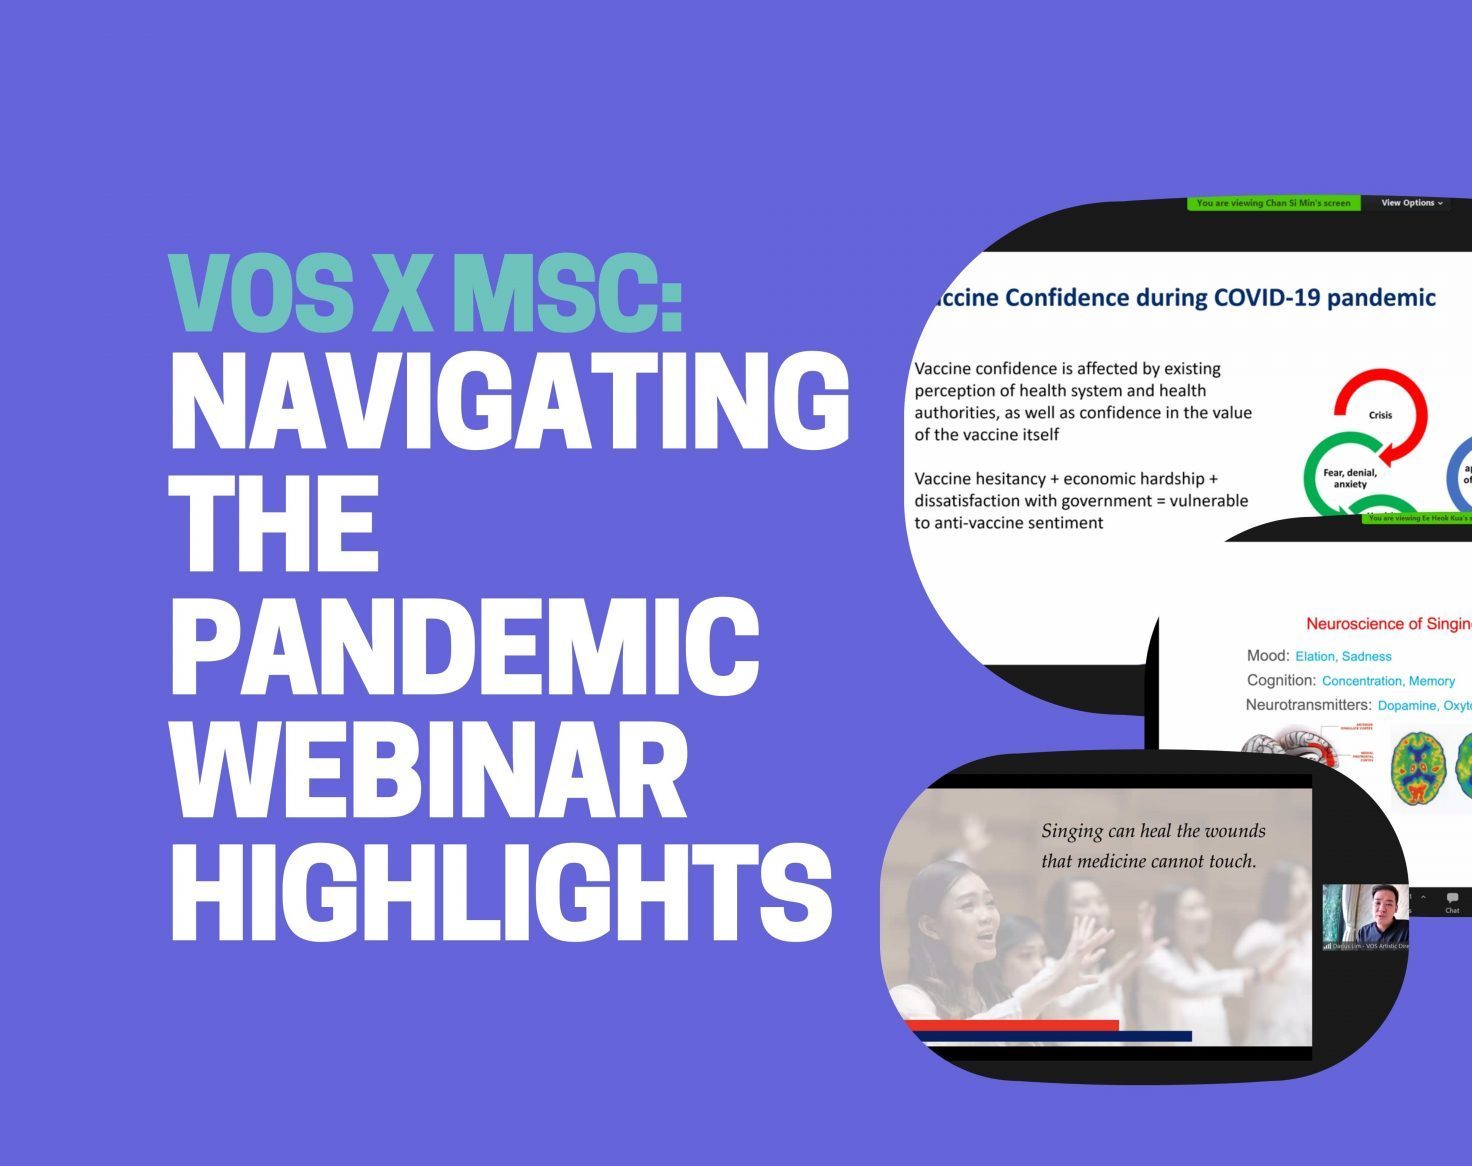 VOS x MSC: Navigating the Pandemic Webinar Highlights